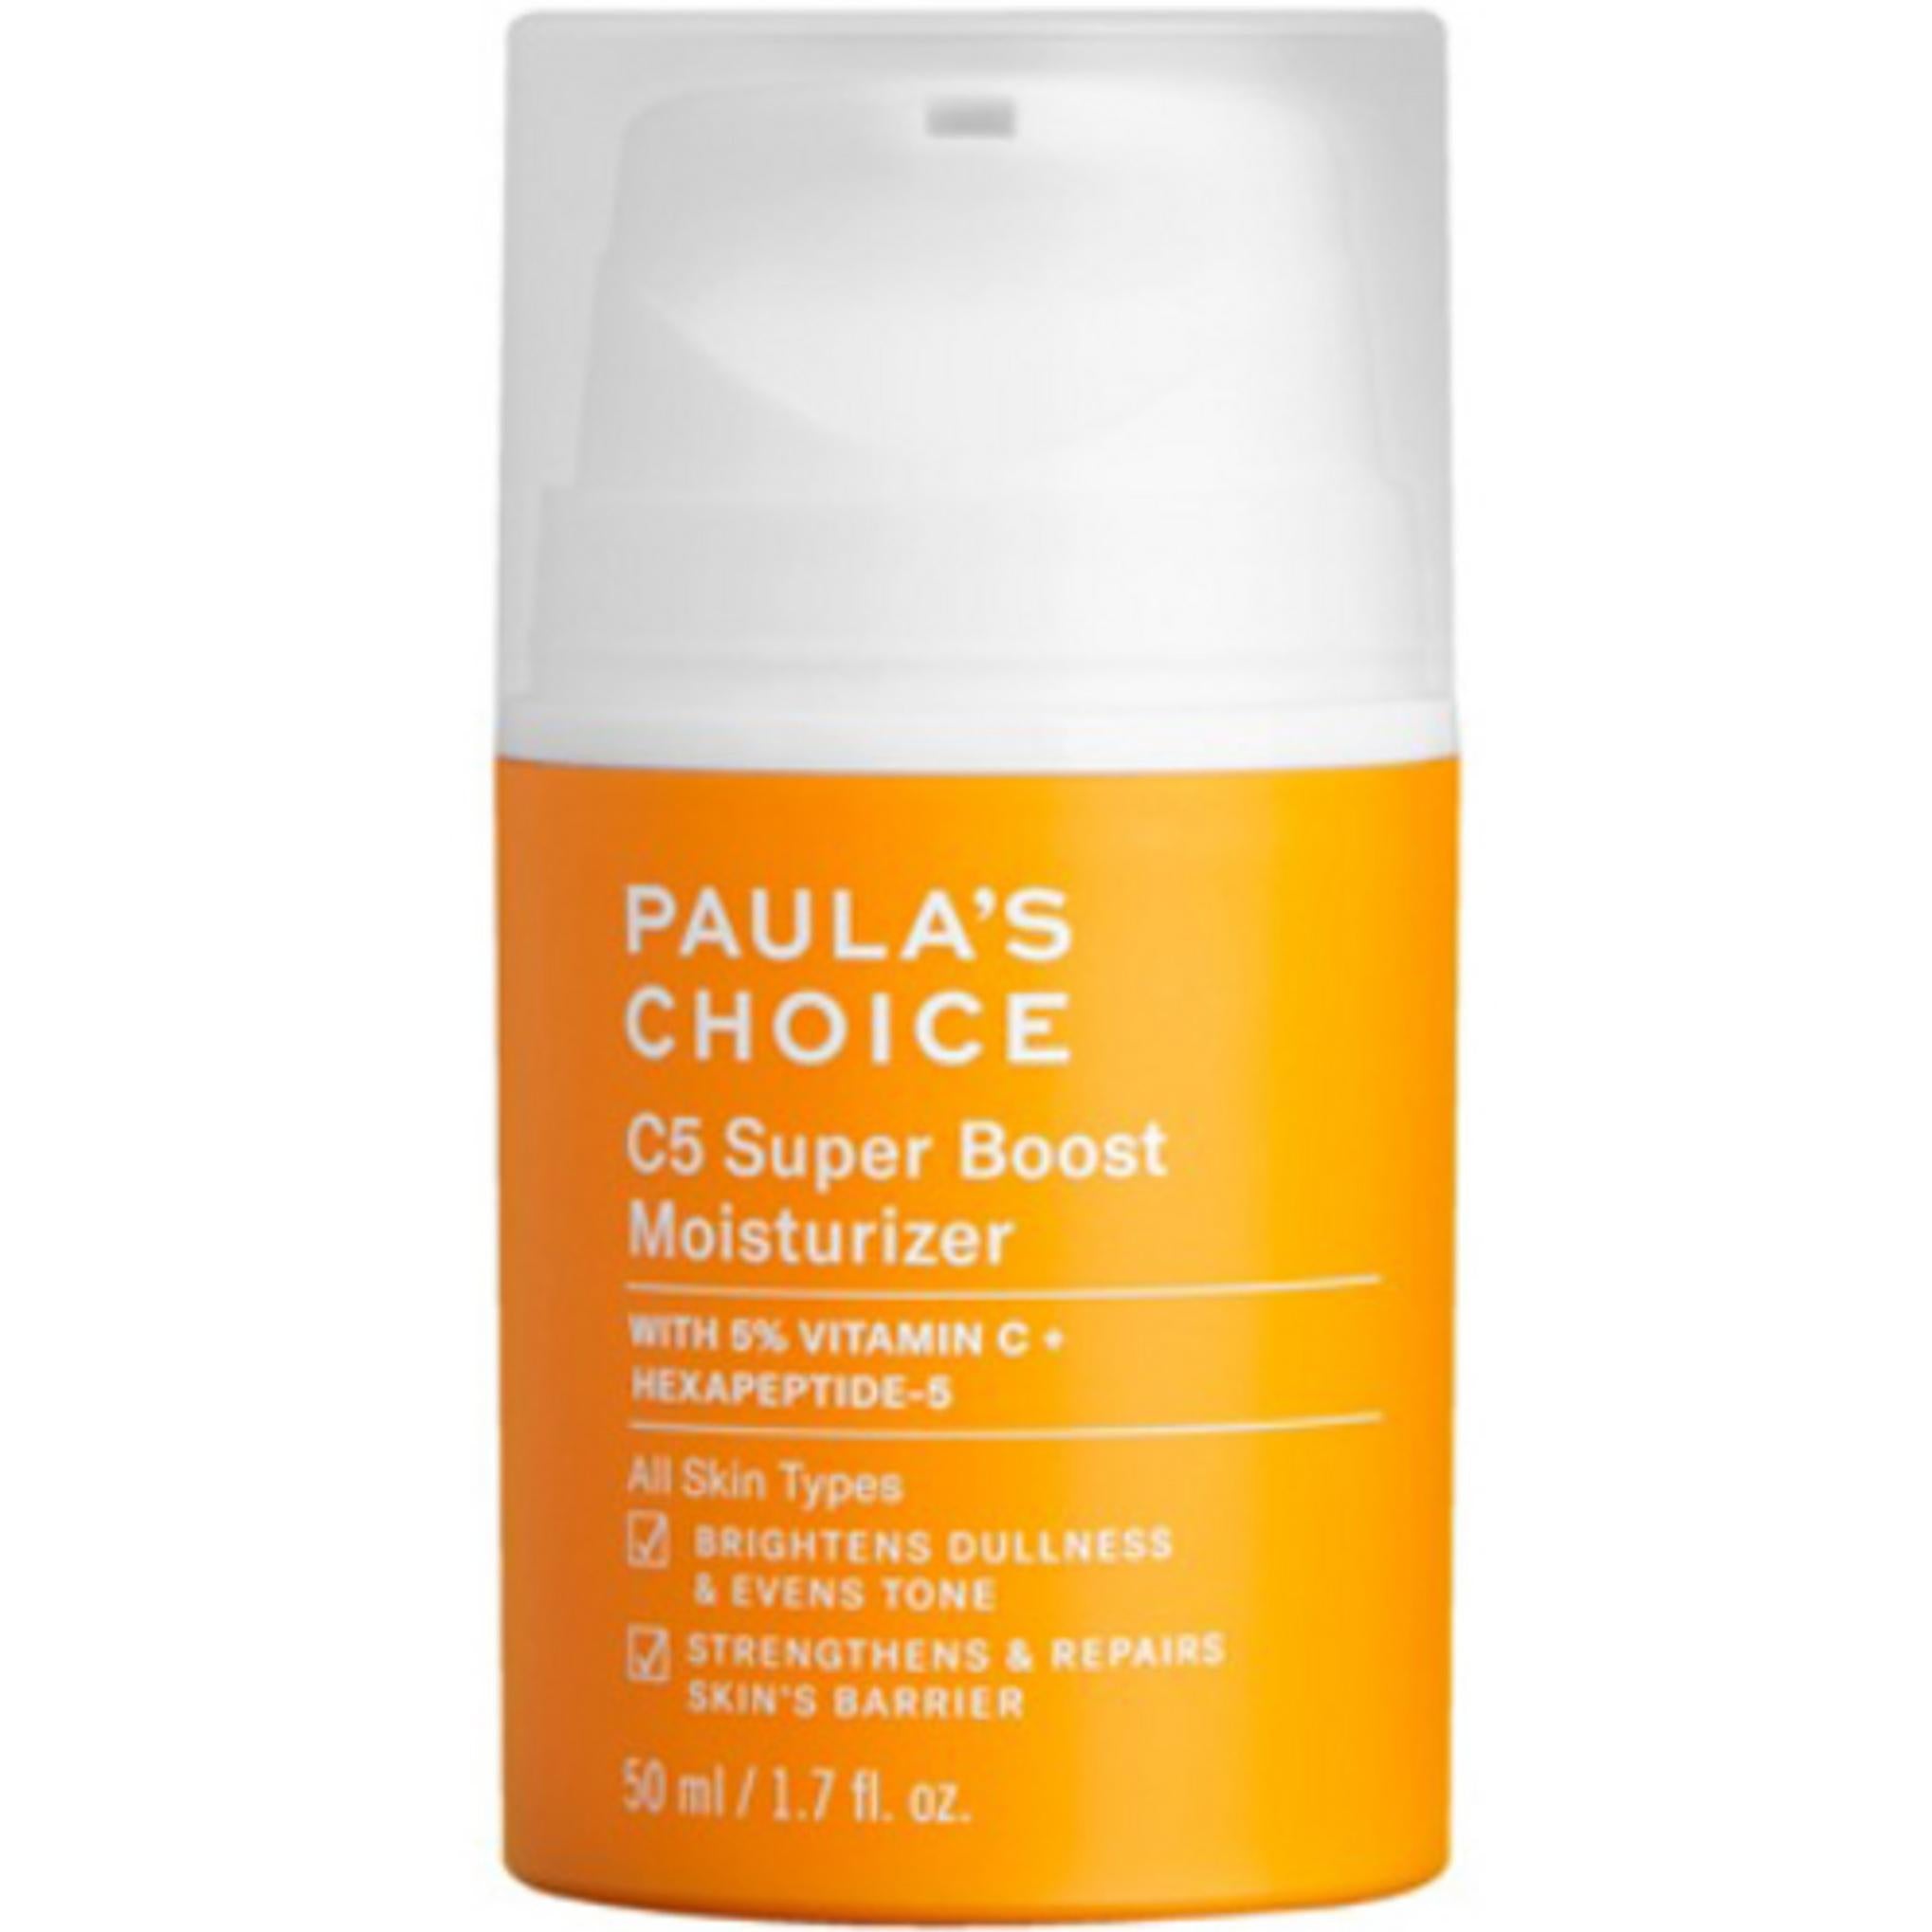 Paula's Choice C5 Super Boost Moisture Cream